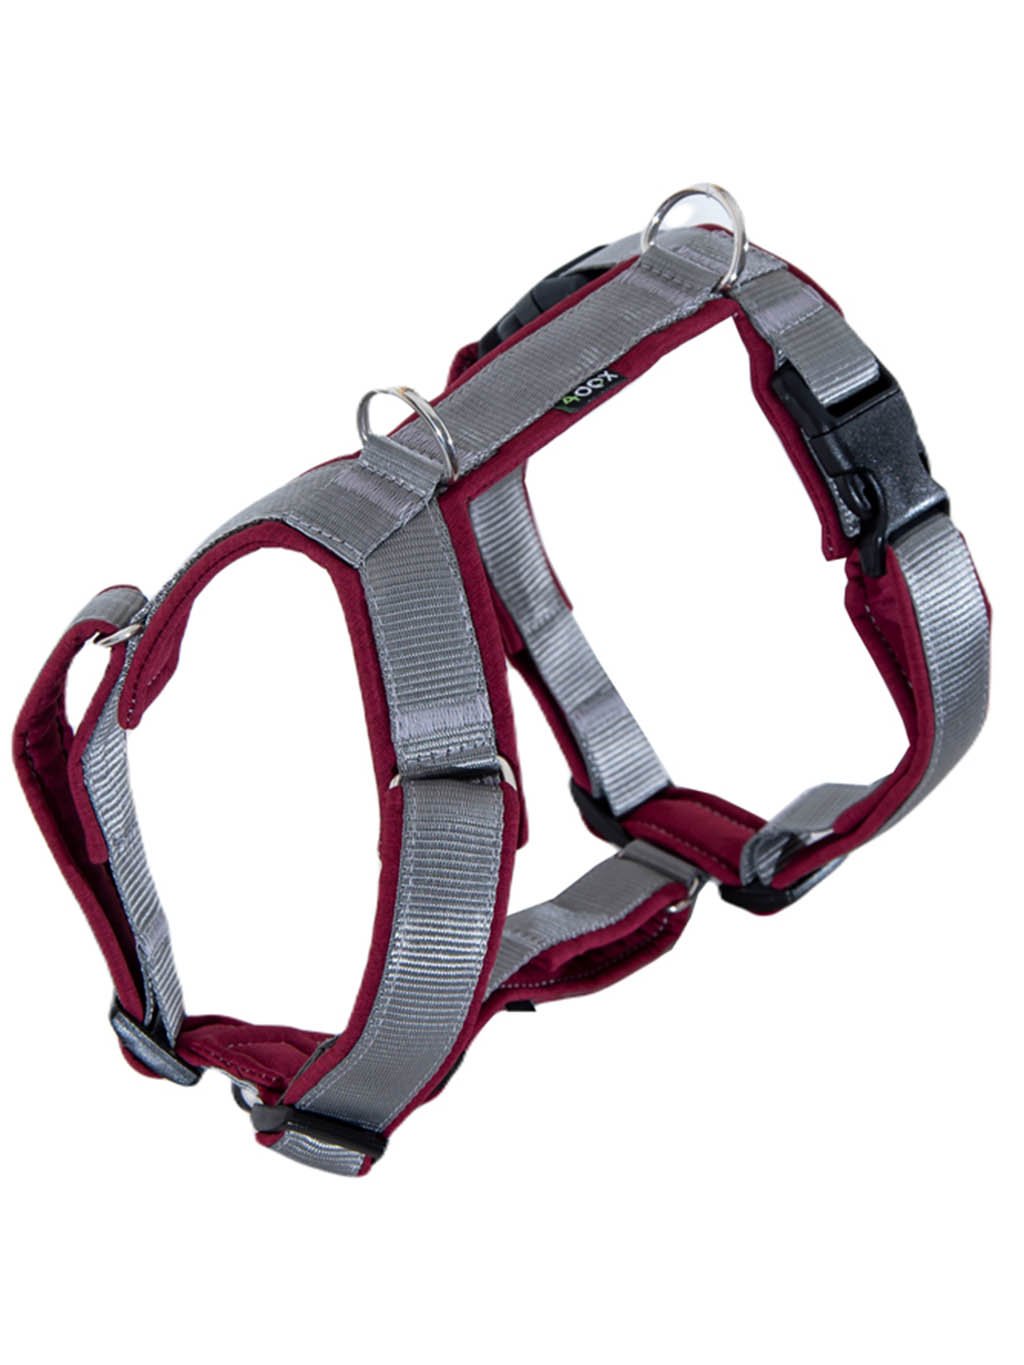 Comfort plus harness - silver-garnet 4dox